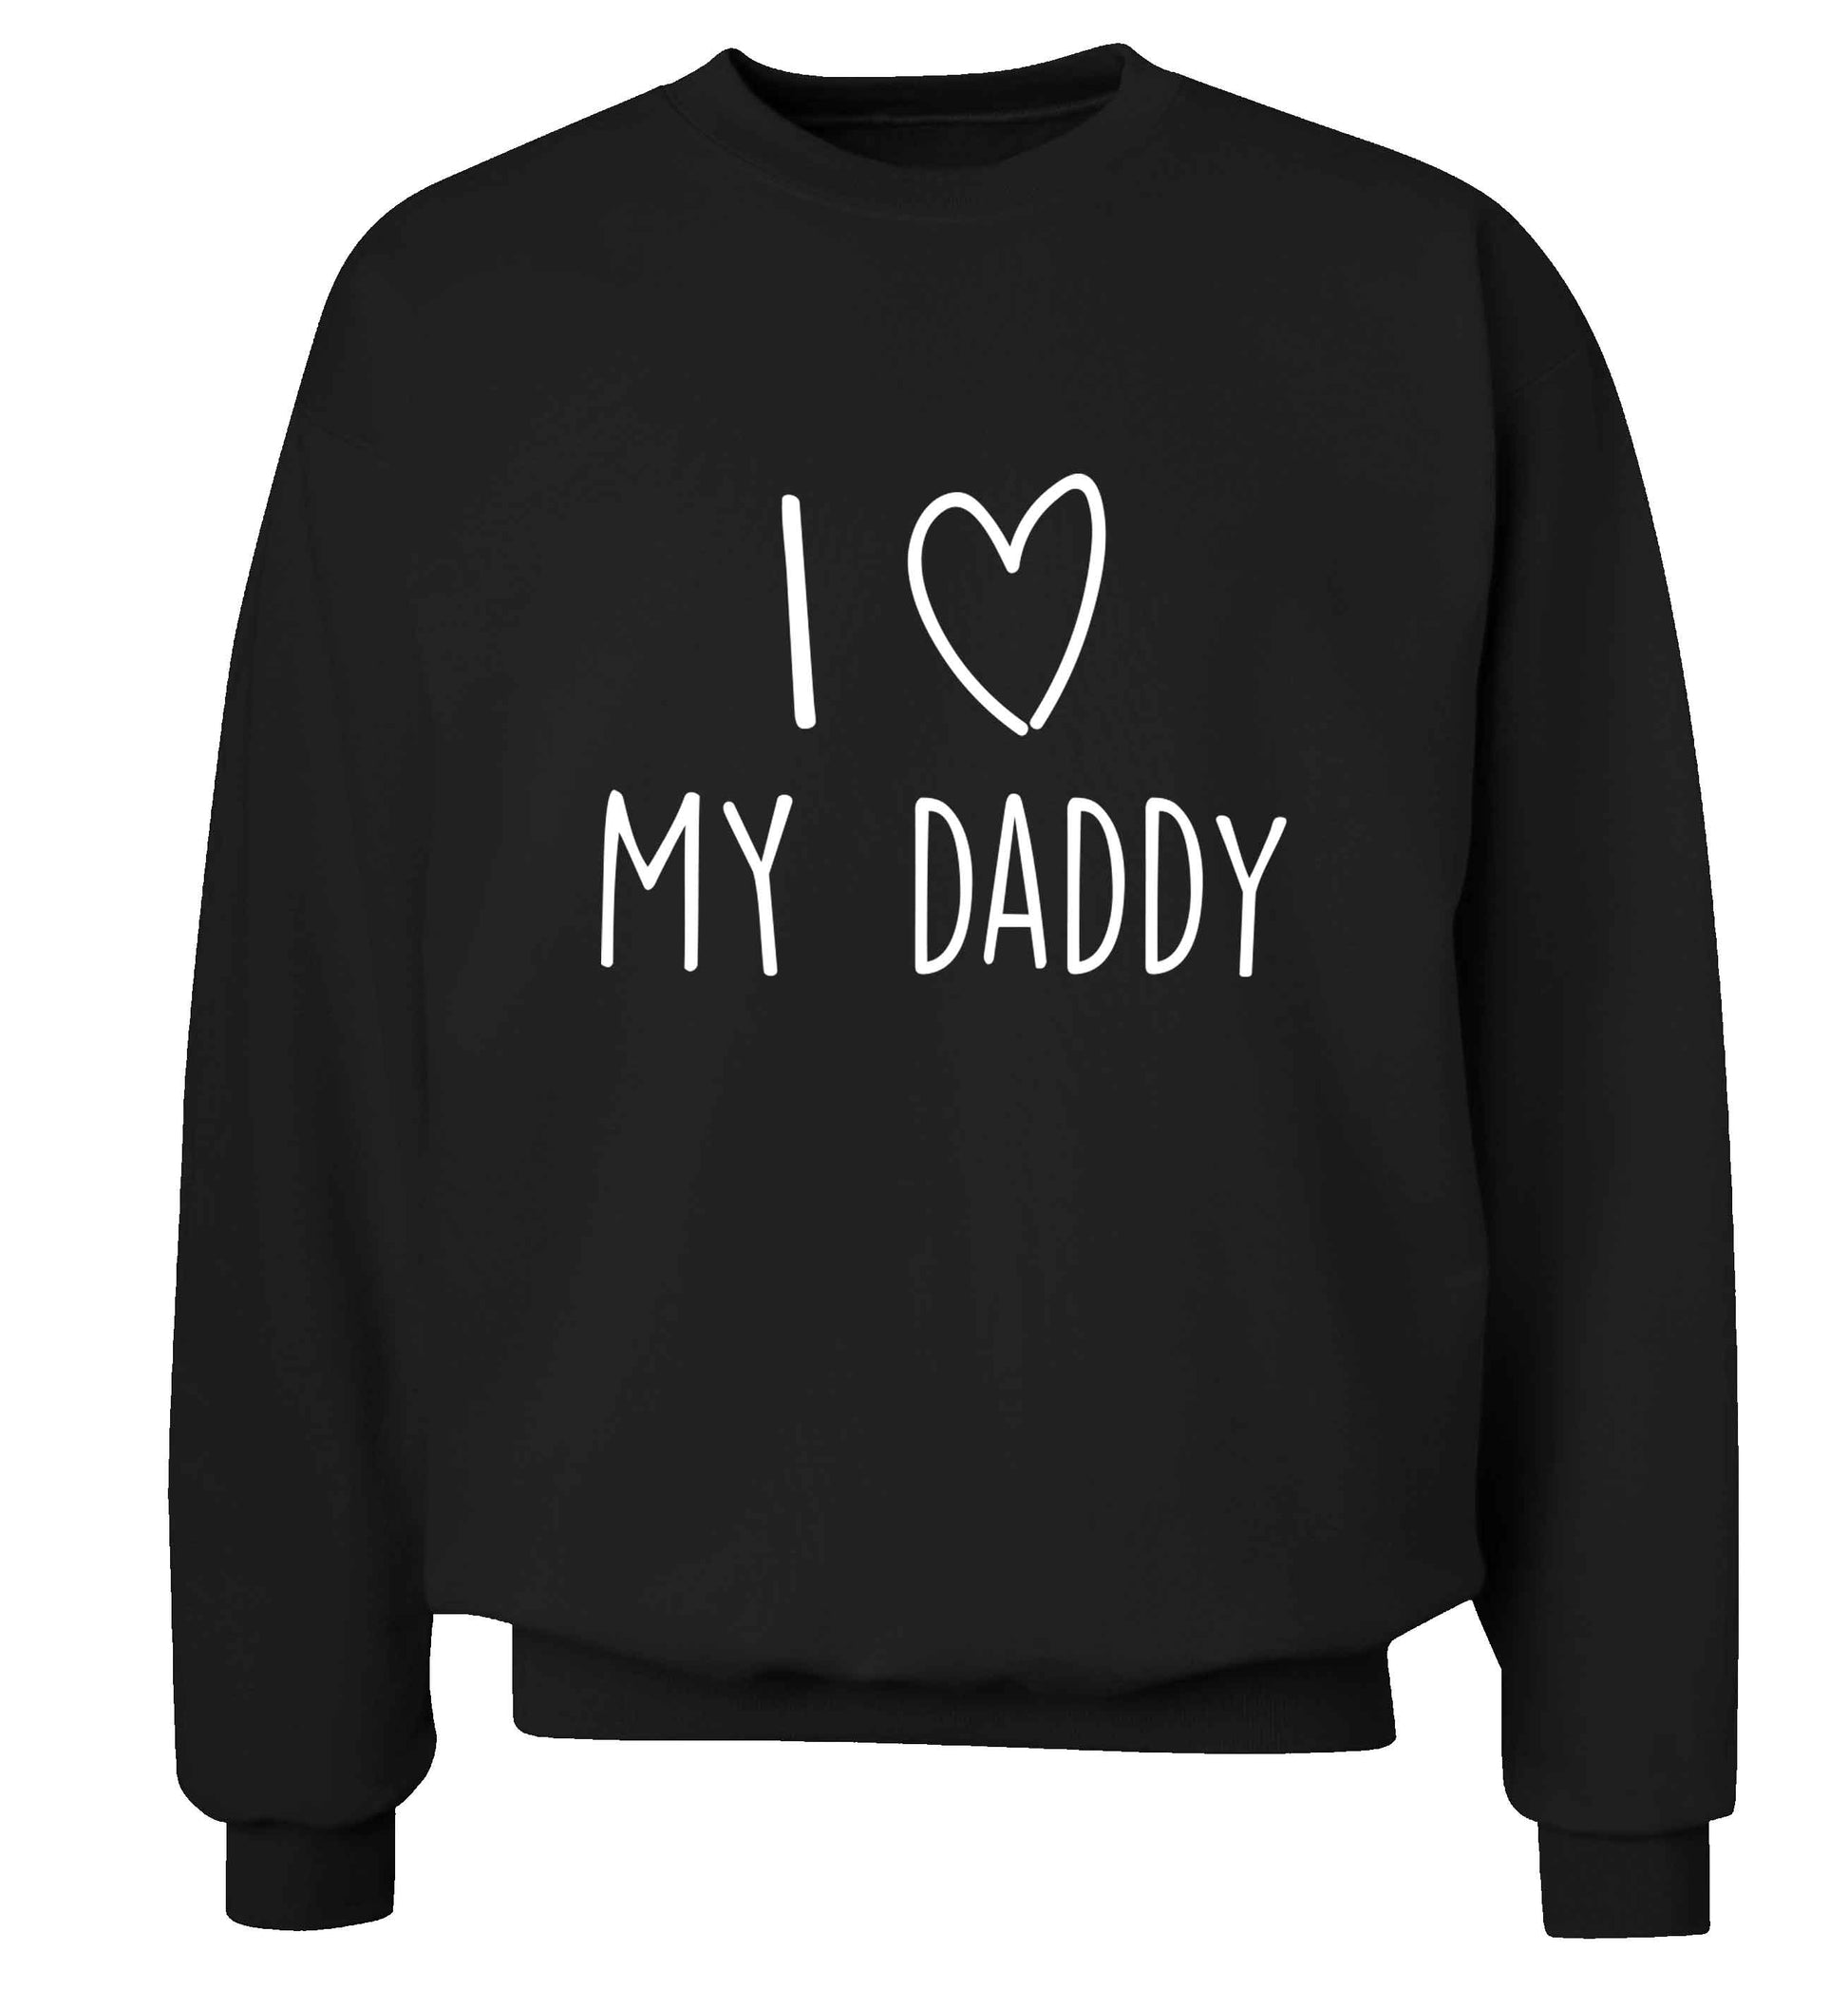 I love my daddy adult's unisex black sweater 2XL